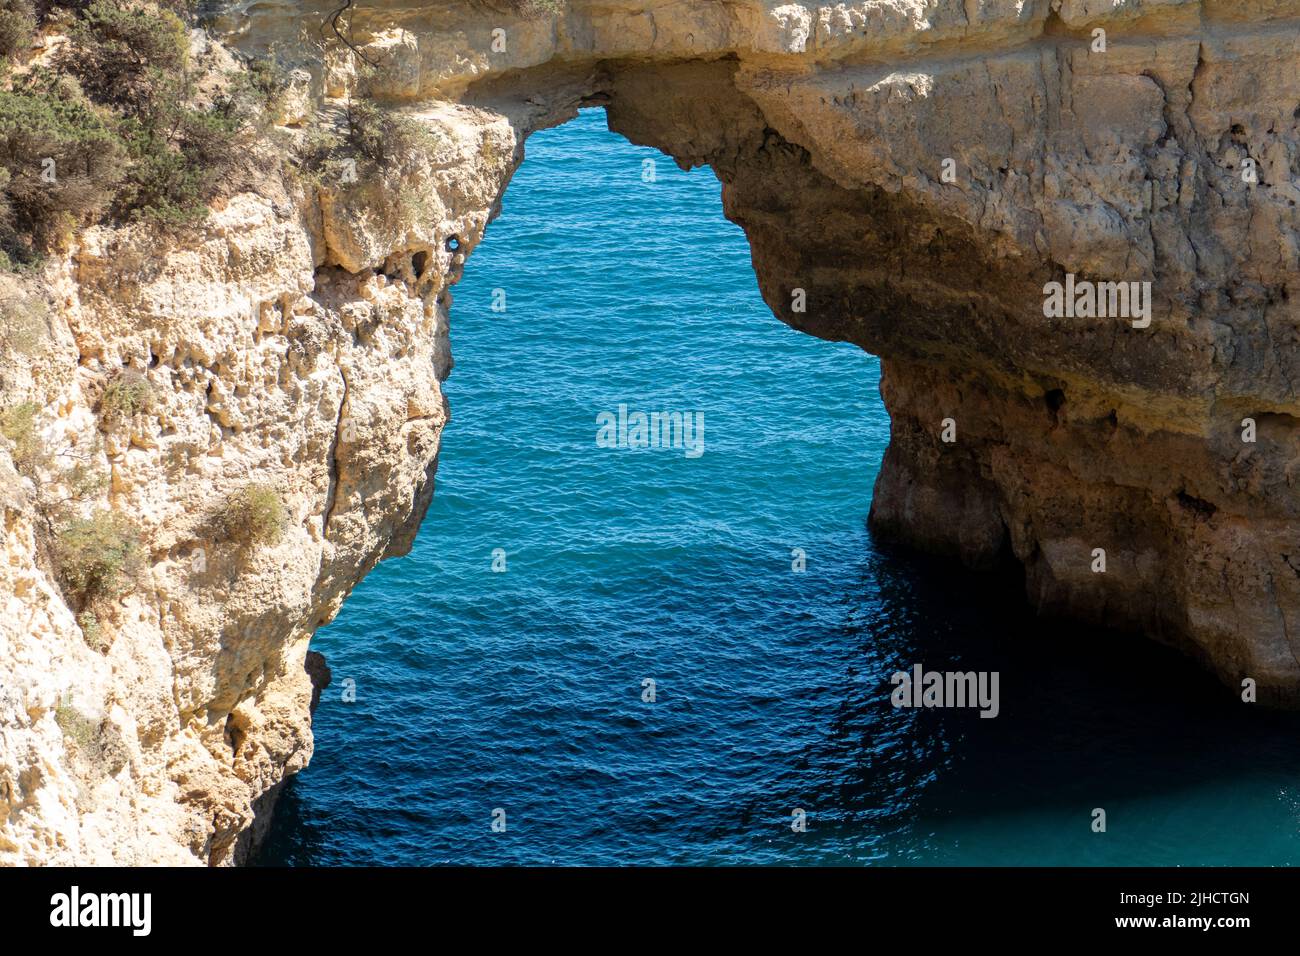 Natural Arch of Albandeira during low tide. Landmark in Lagoa, Algarve. Stock Photo